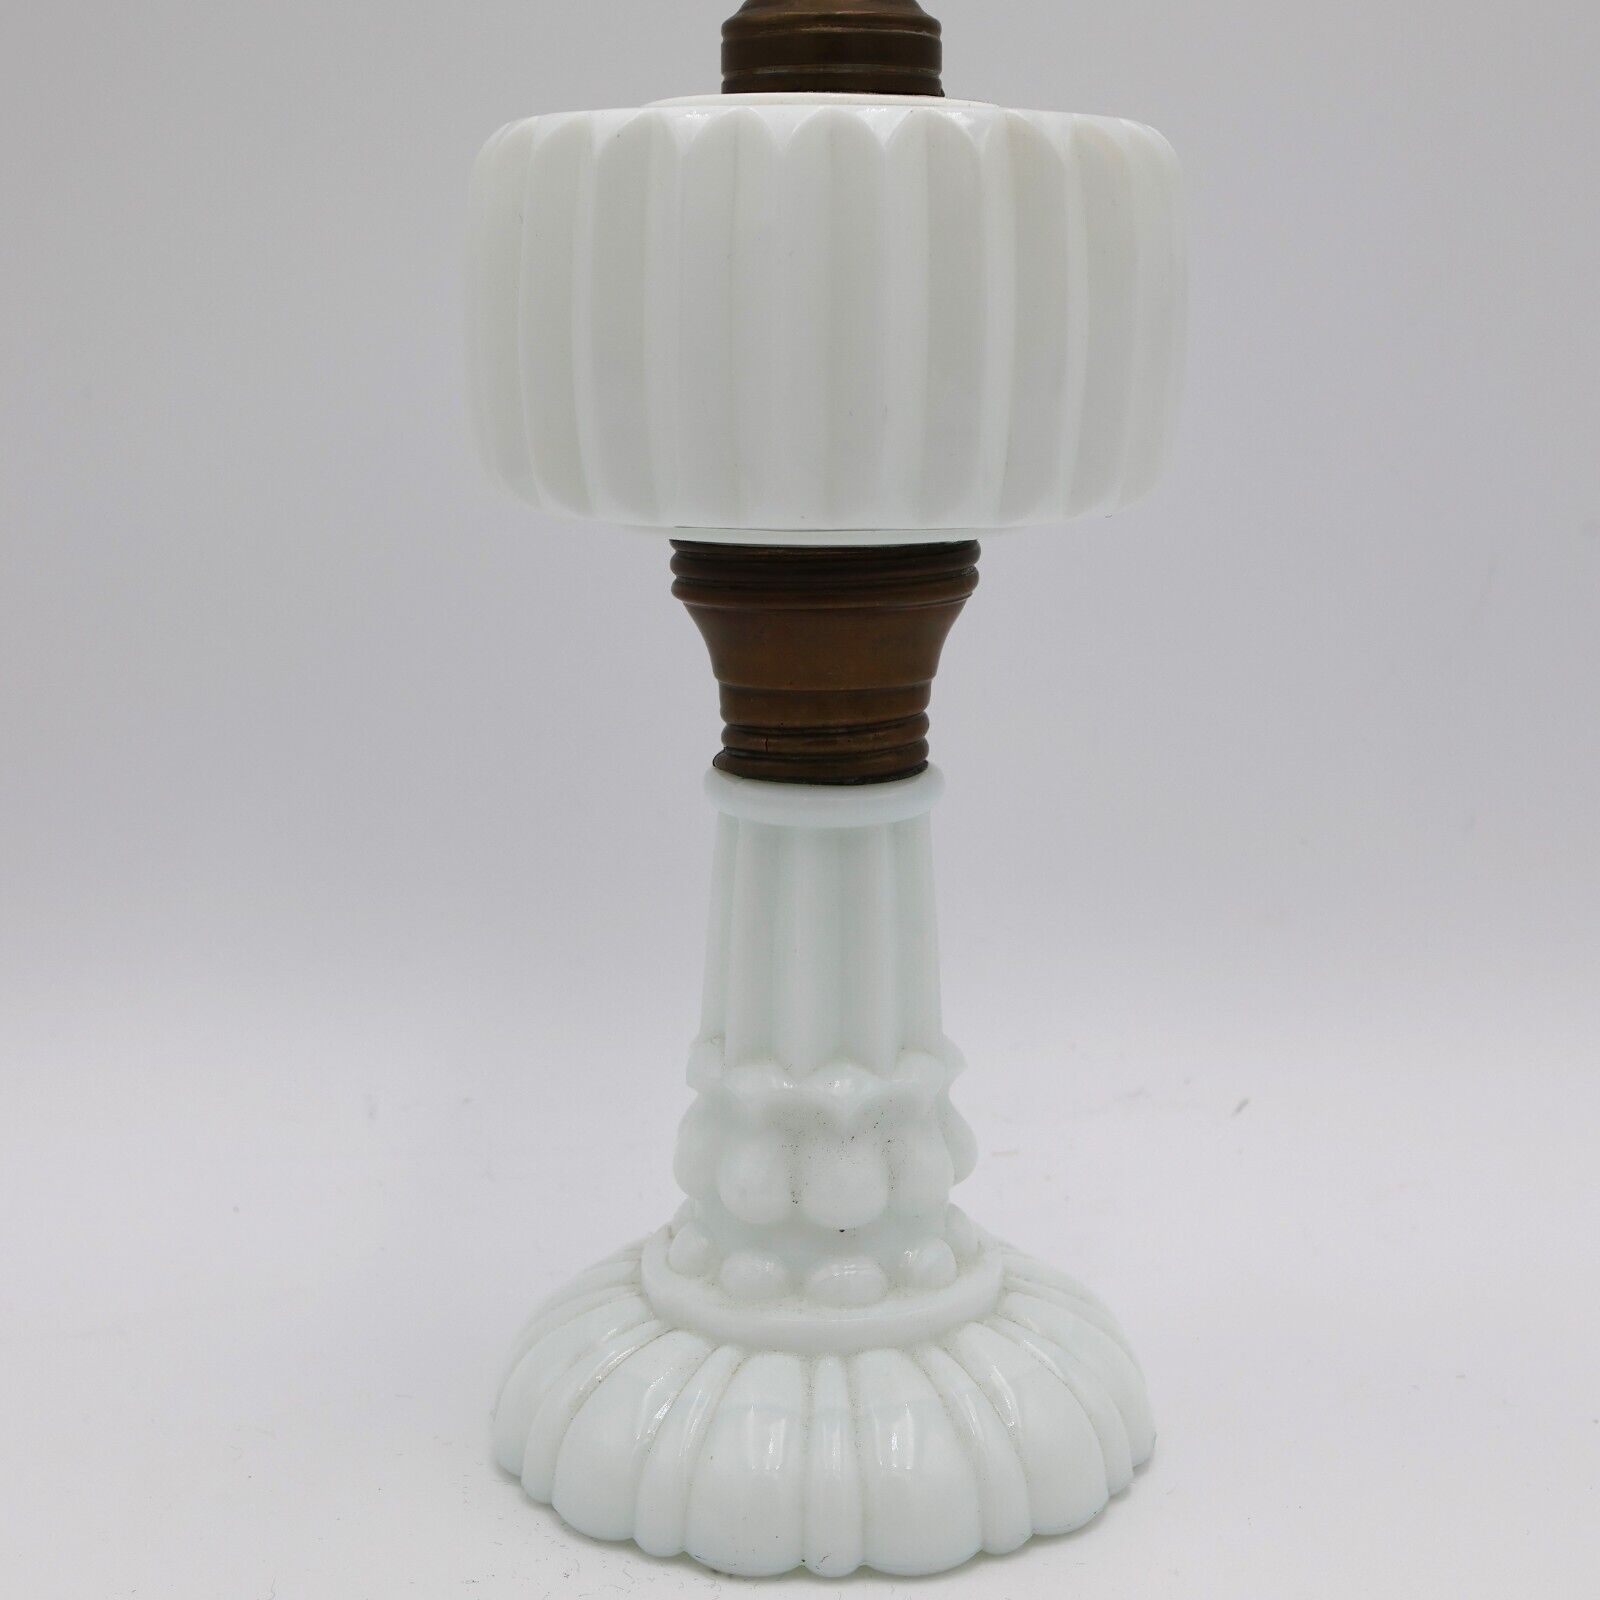 Antique Milk Glass Victorian Pedestal Stand Oil Lamp c1890s Good Condition